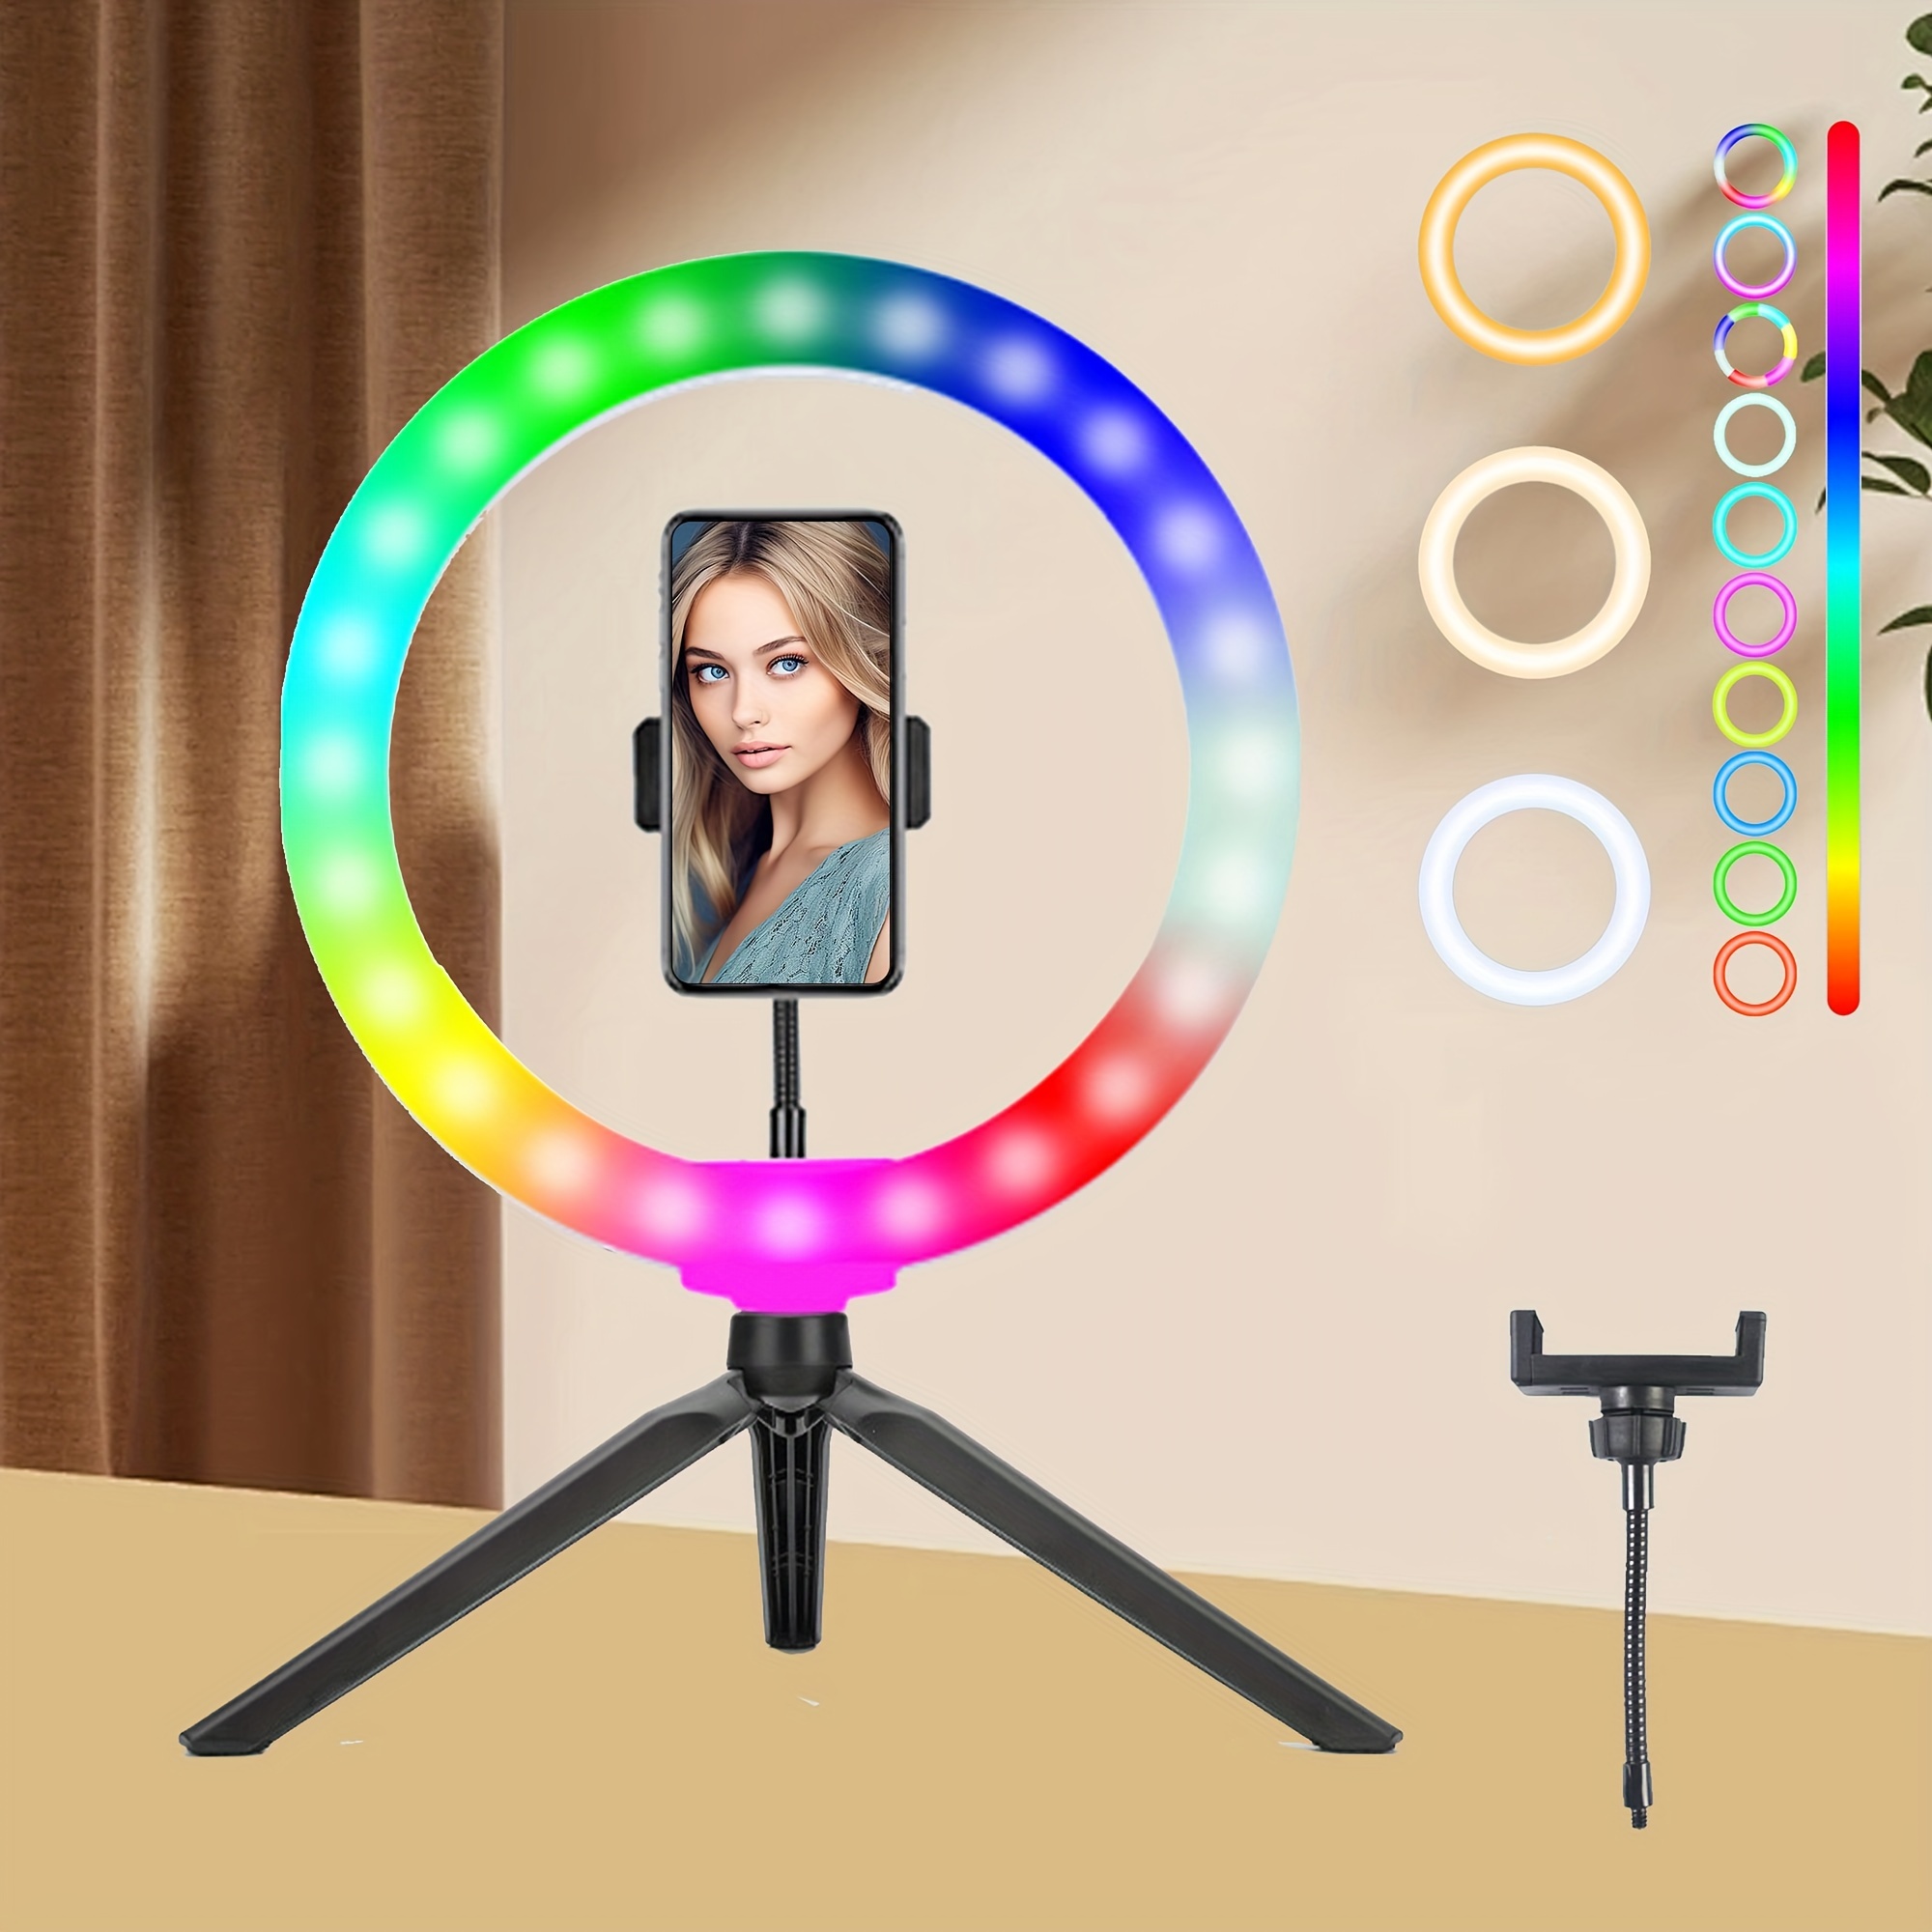 

Professional 10 Inch Rgm Ring Light Kit, Adjustable Color, Sturdy Tripod Stand & Phone Holder For Video, Selfie, Makeup